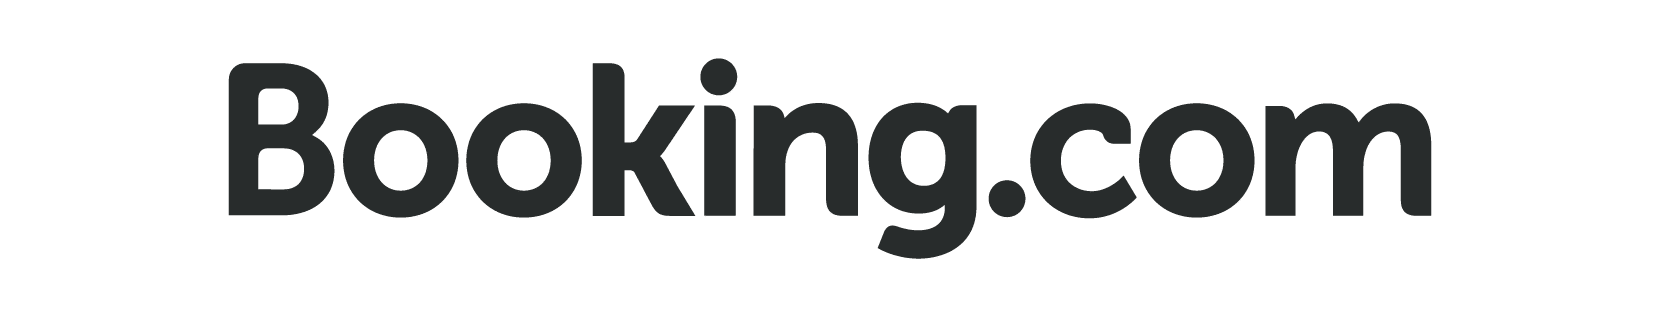 booking_com_logo-1.png